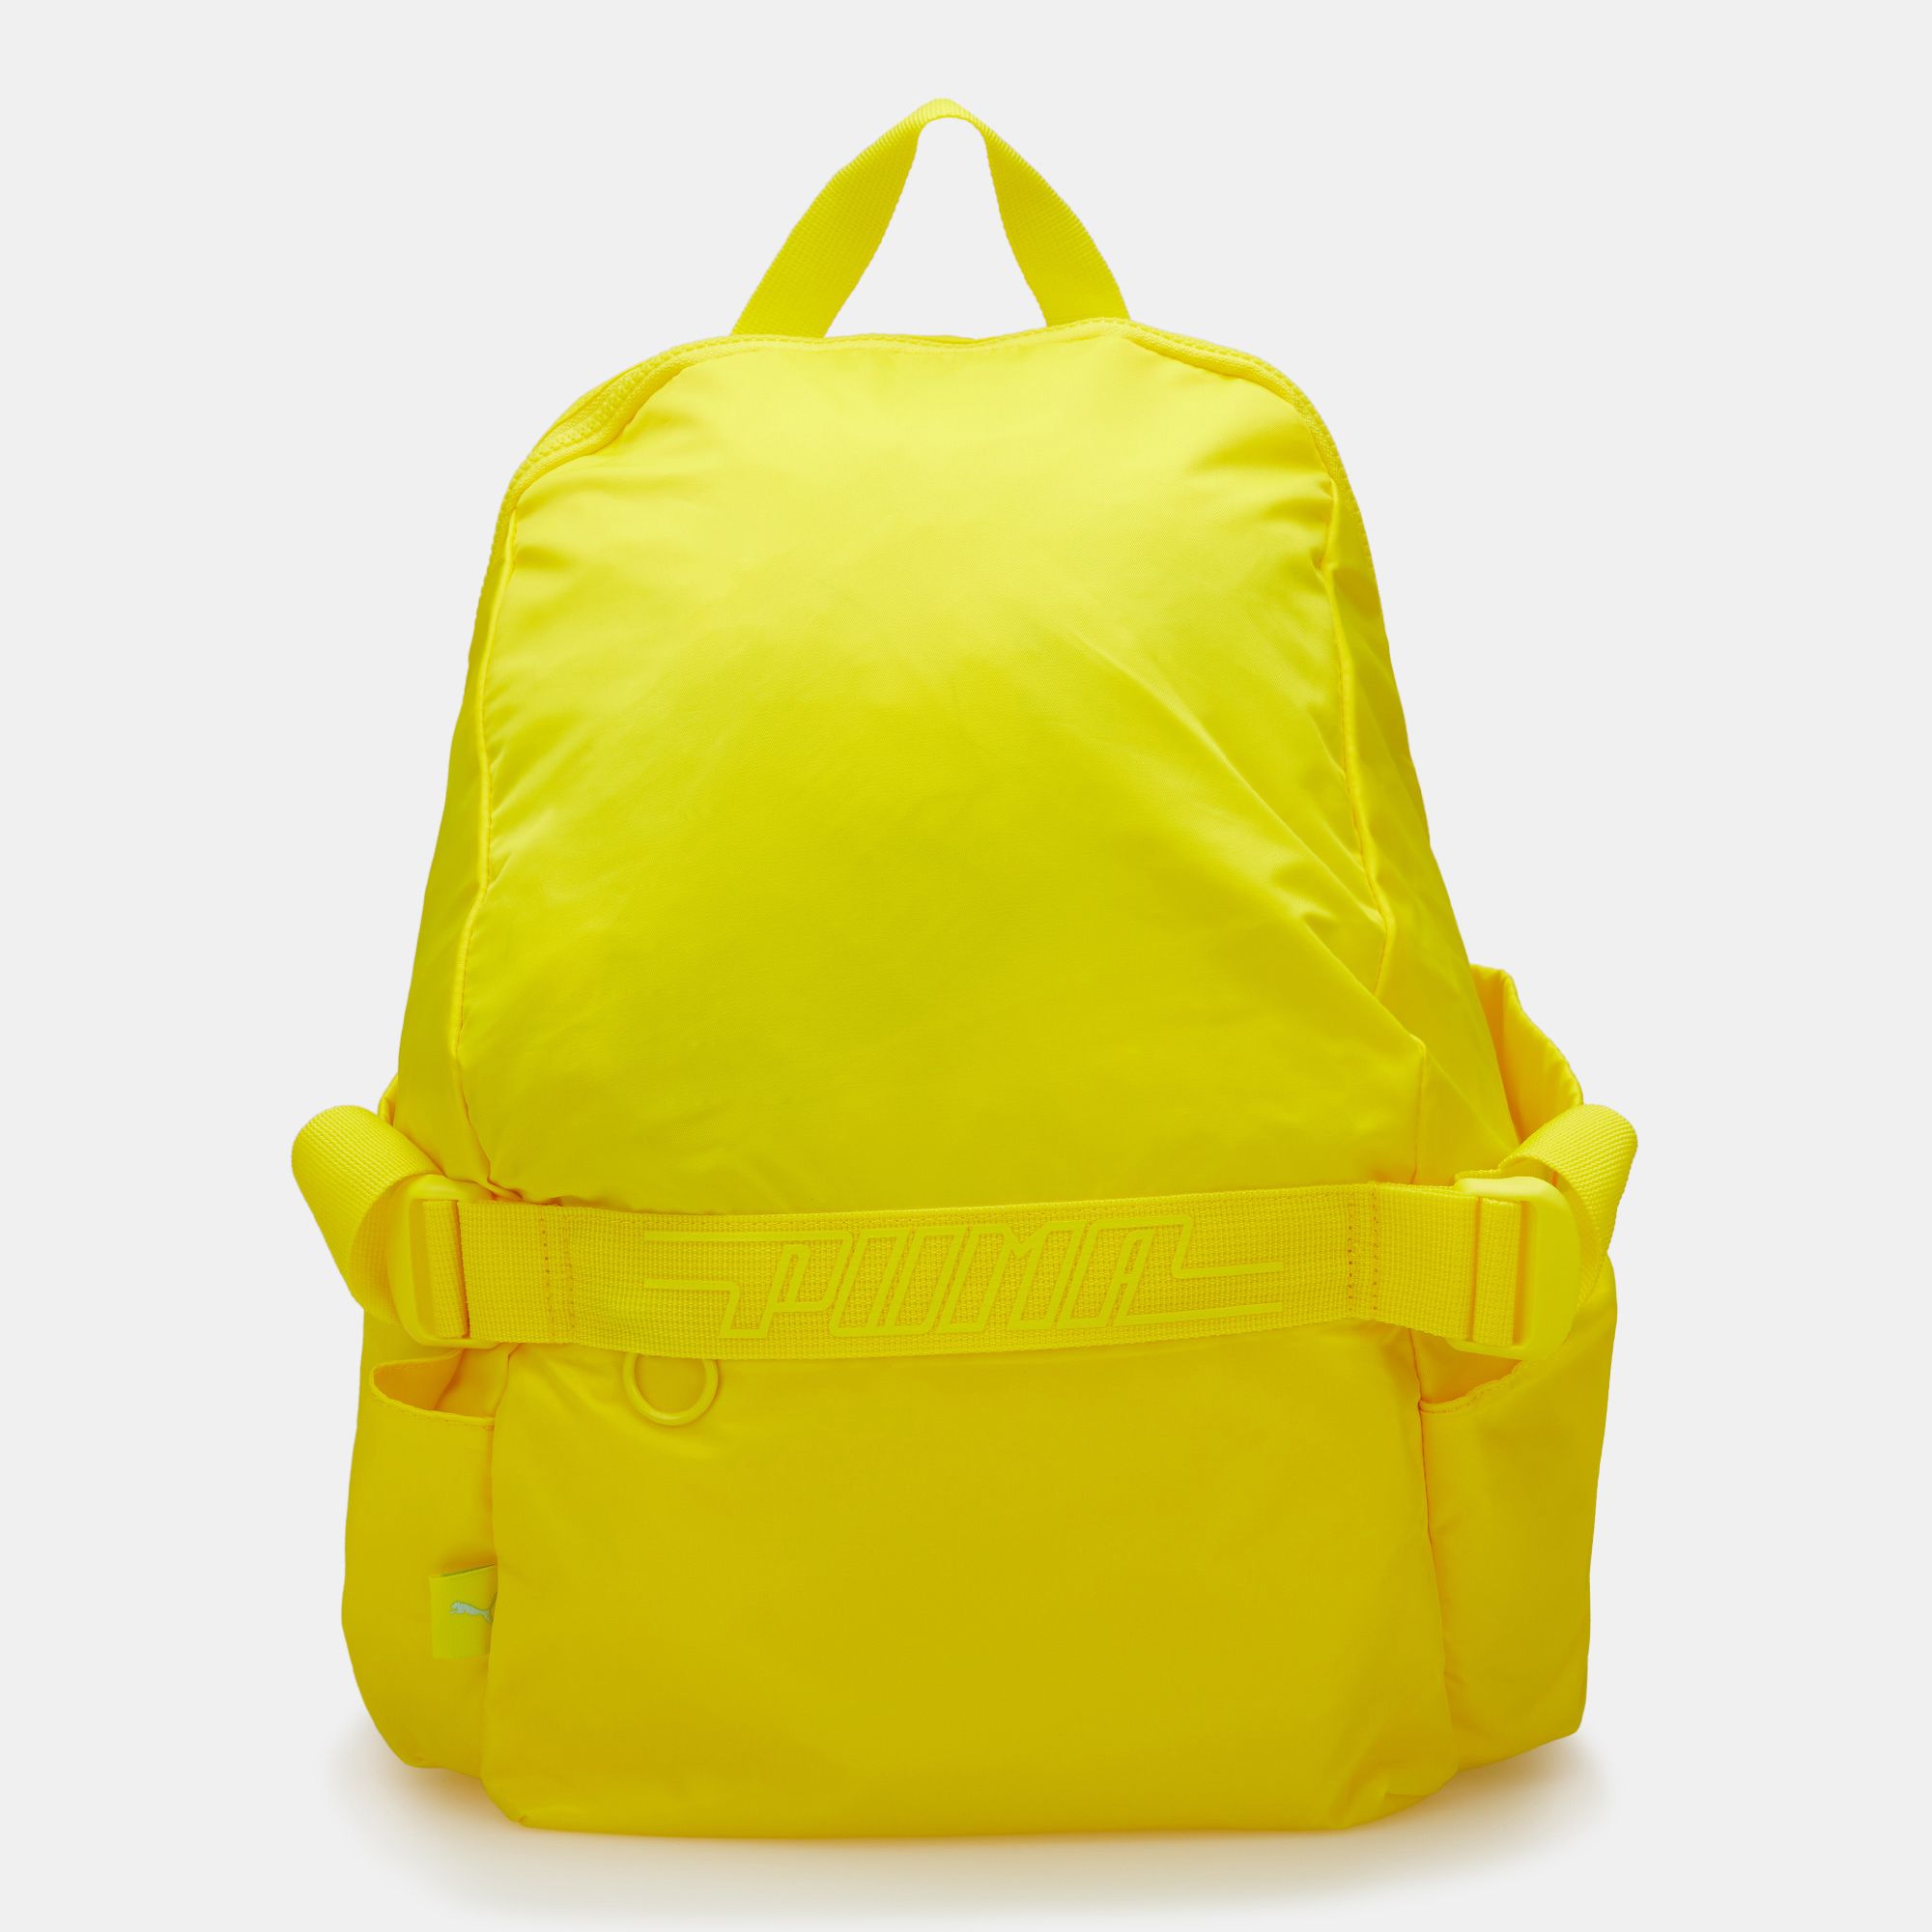 puma yellow backpack